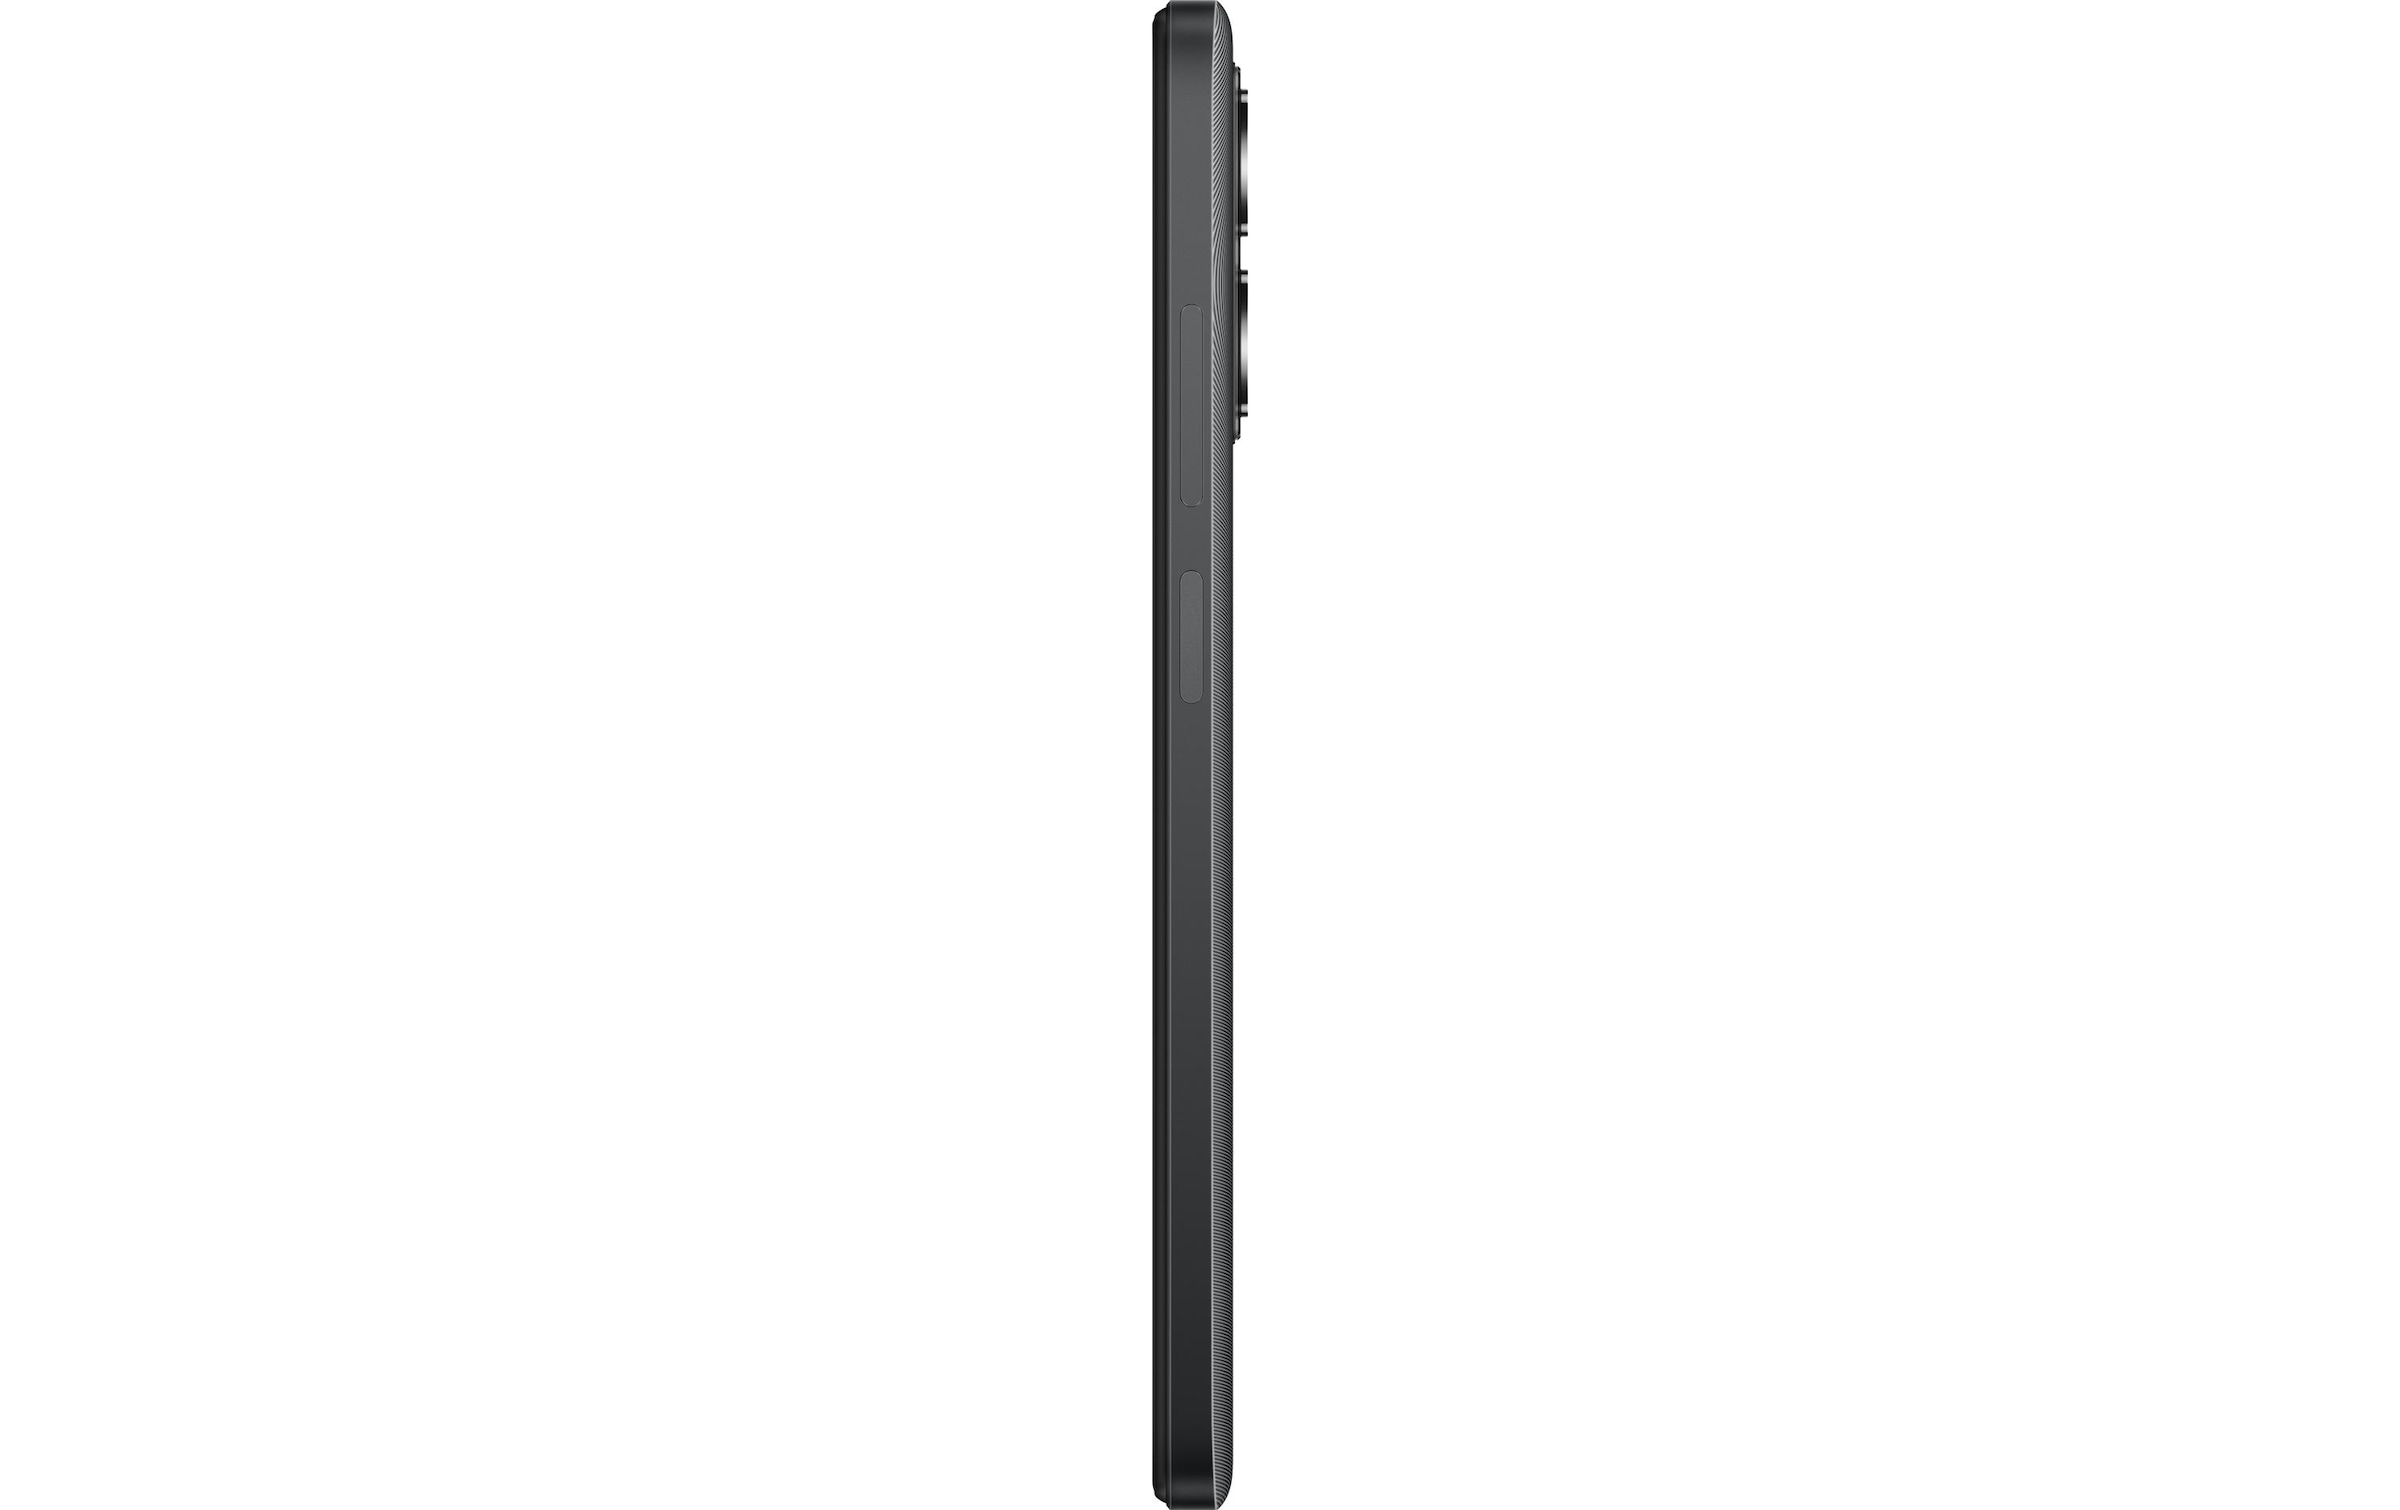 Xiaomi Smartphone »10 5G 64 GB Graphite Gray«, Schwarz, 16,64 cm/6,58 Zoll, 64 GB Speicherplatz, 50 MP Kamera